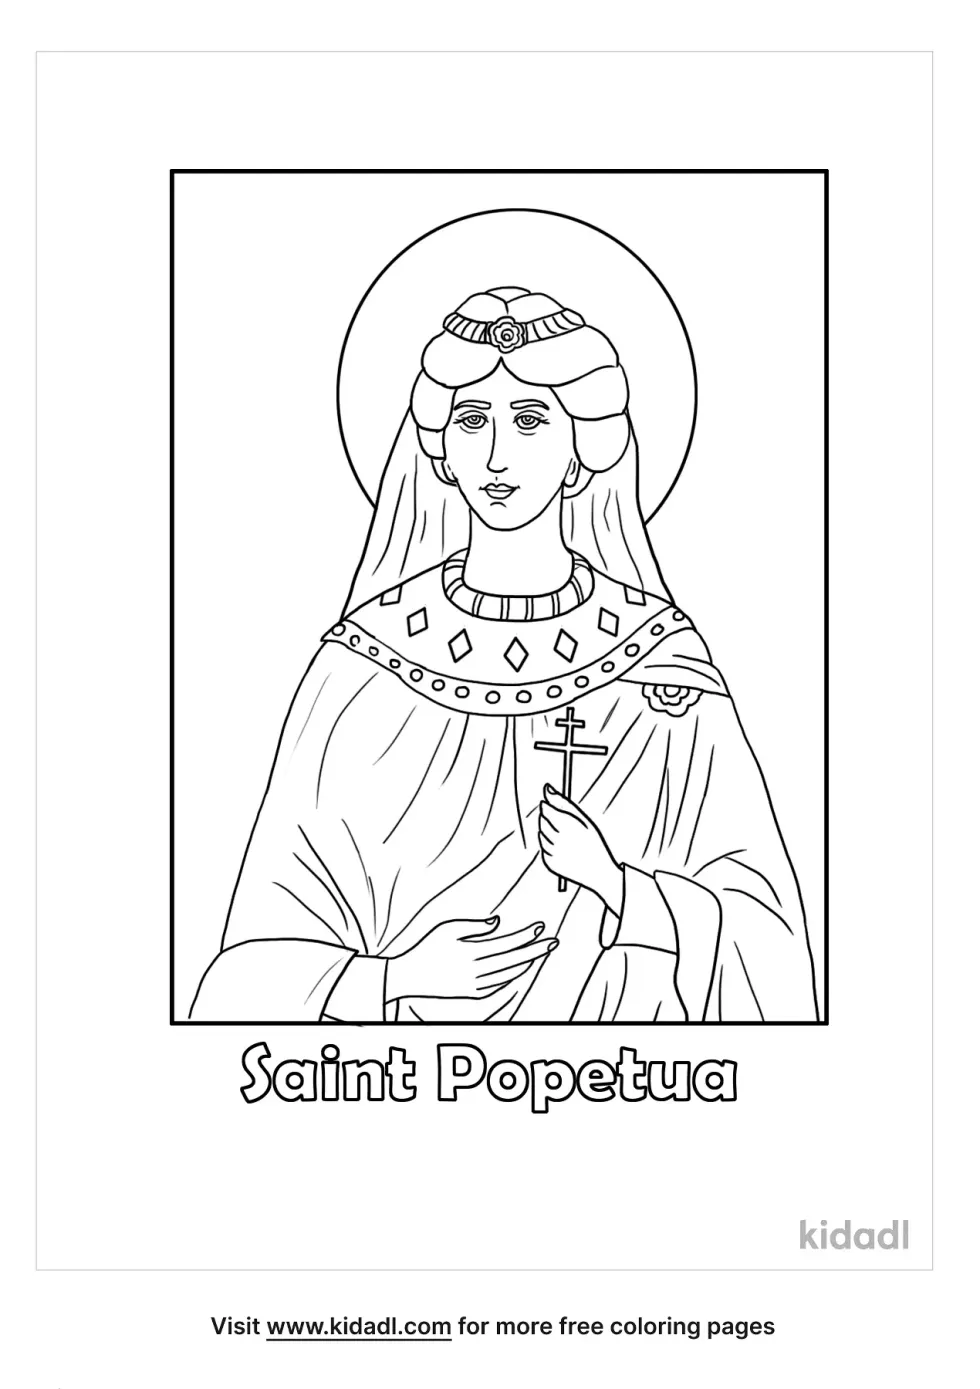 Saint Popetua Coloring Page